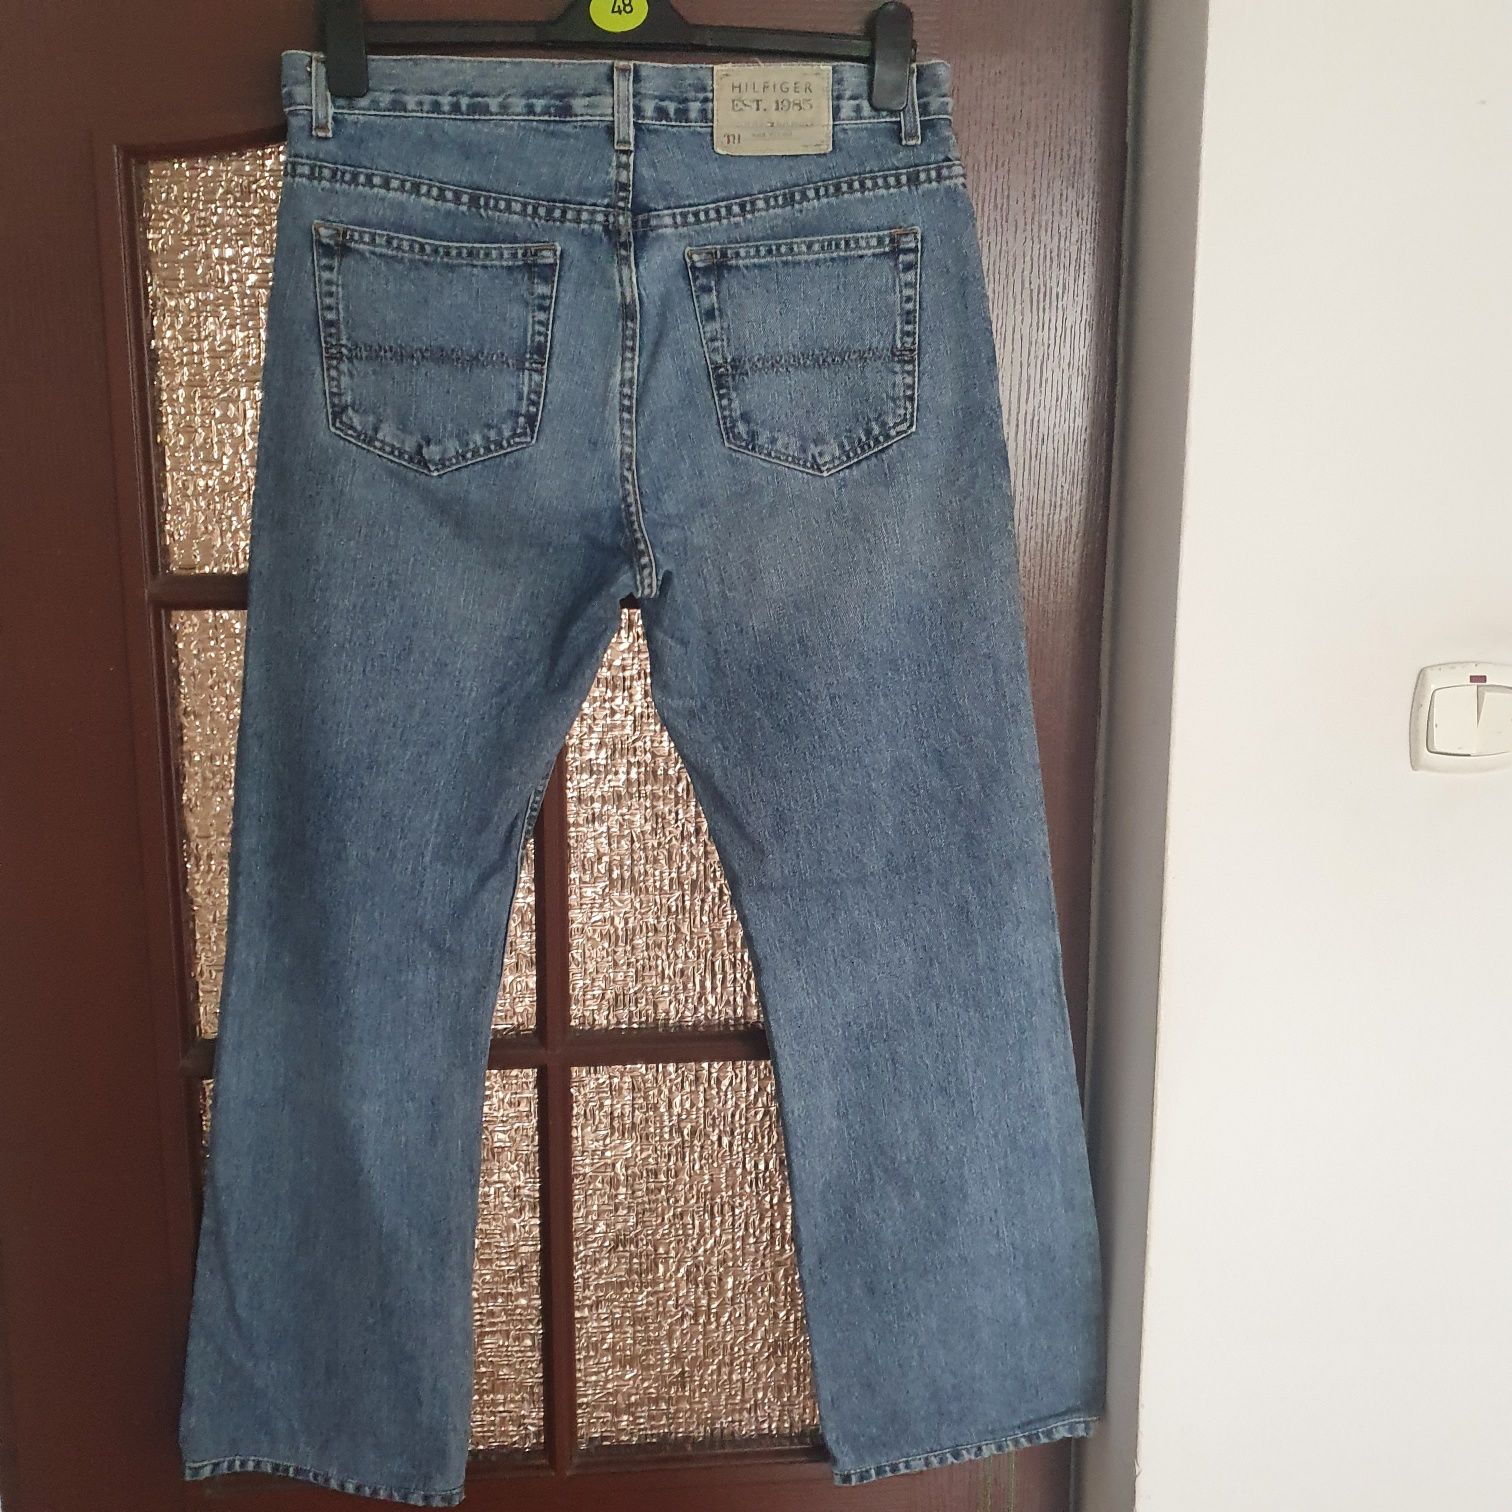 Oryginalne jeansy Tomy Hilfiger r. 34